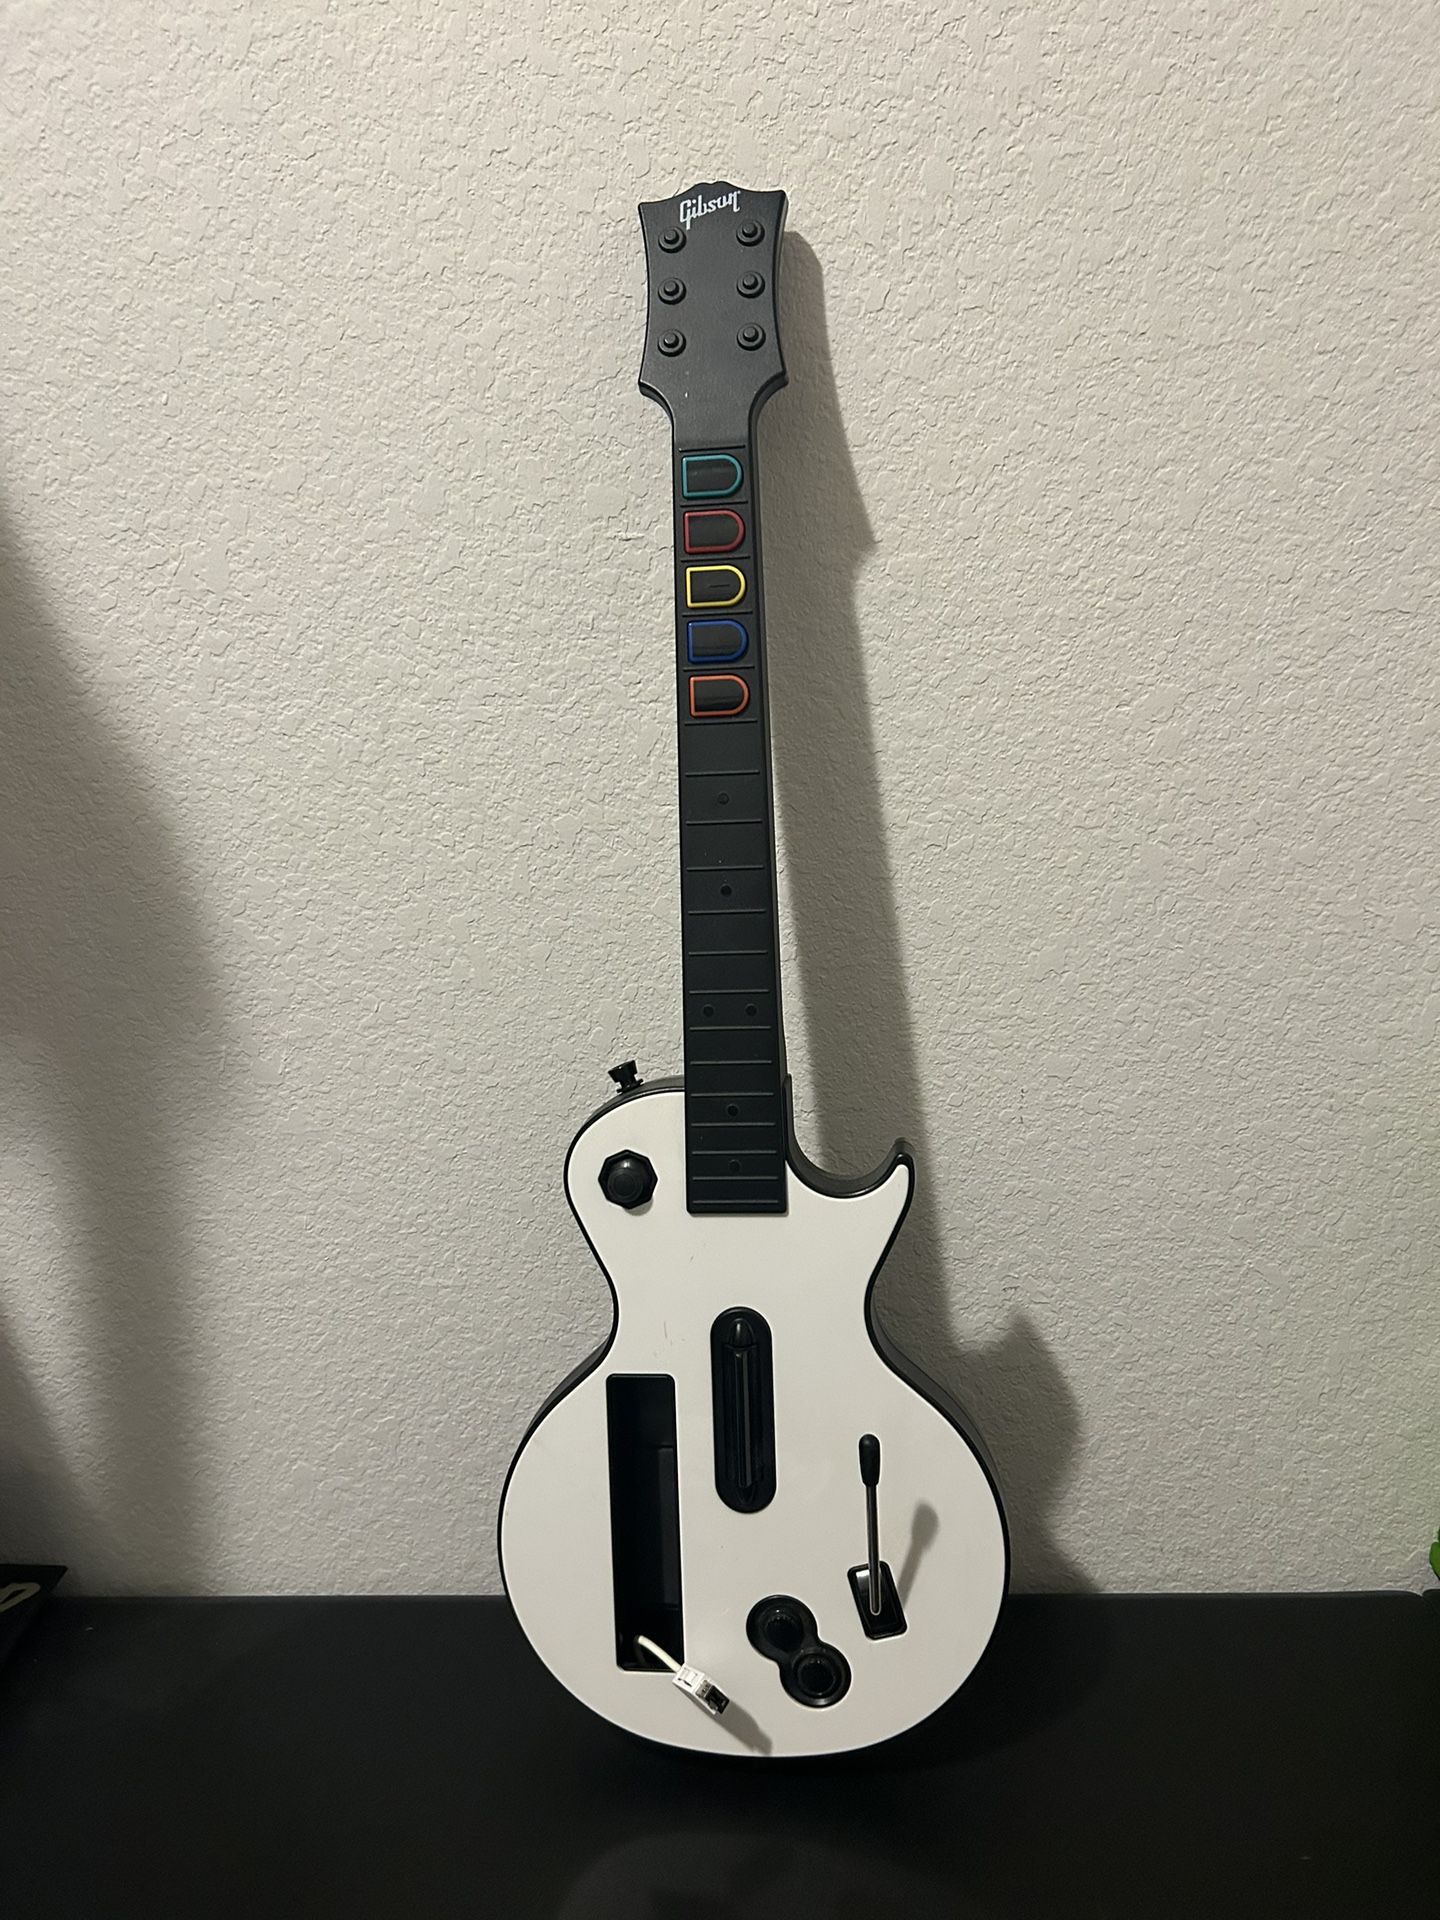 Guitar Hero Guitar Nintendo Wii